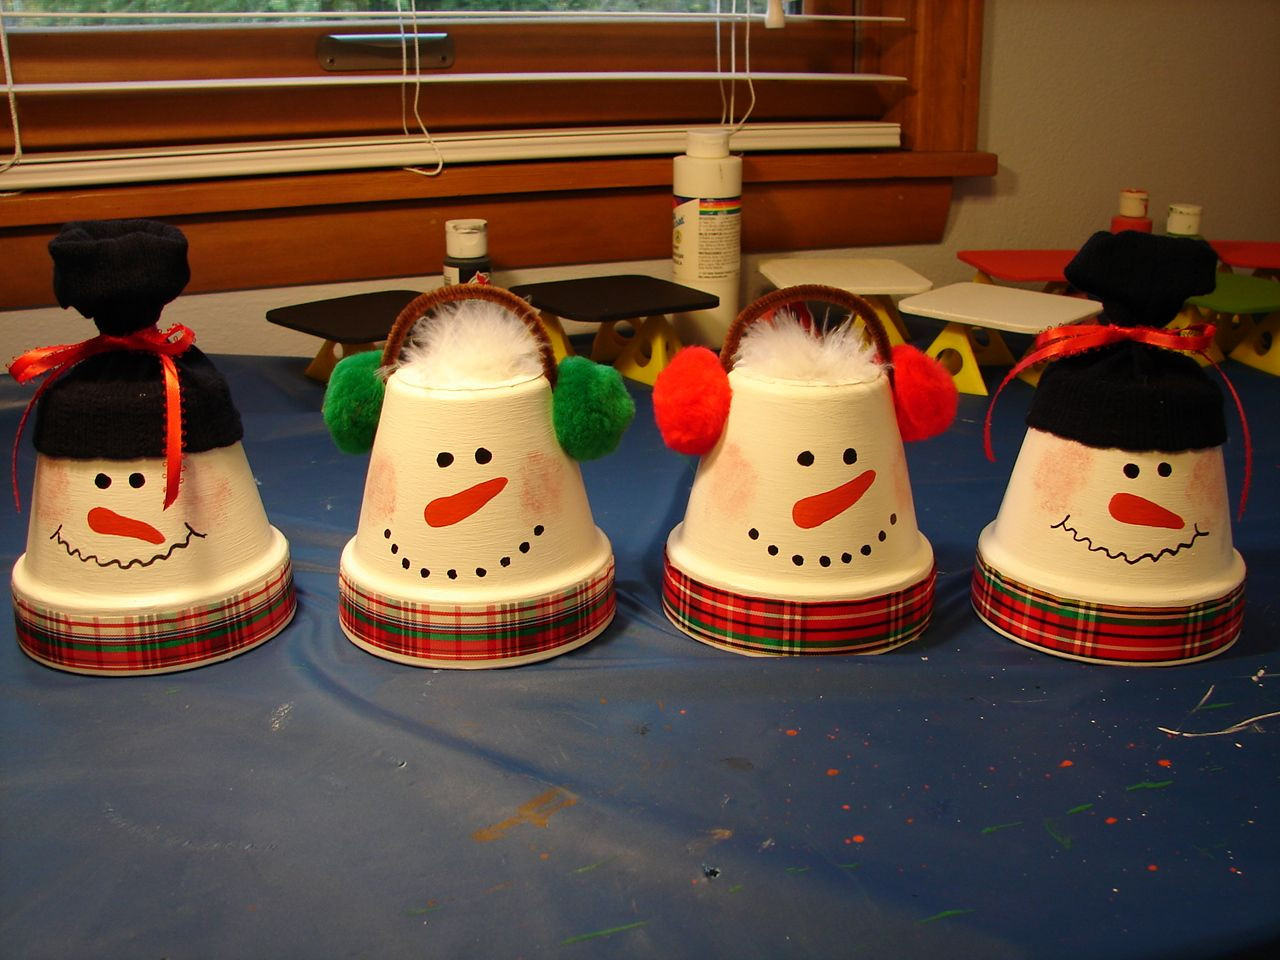 Best ideas about Pinterest Christmas Craft Ideas
. Save or Pin Pinterest inspired craft Christmas Ideas Now.